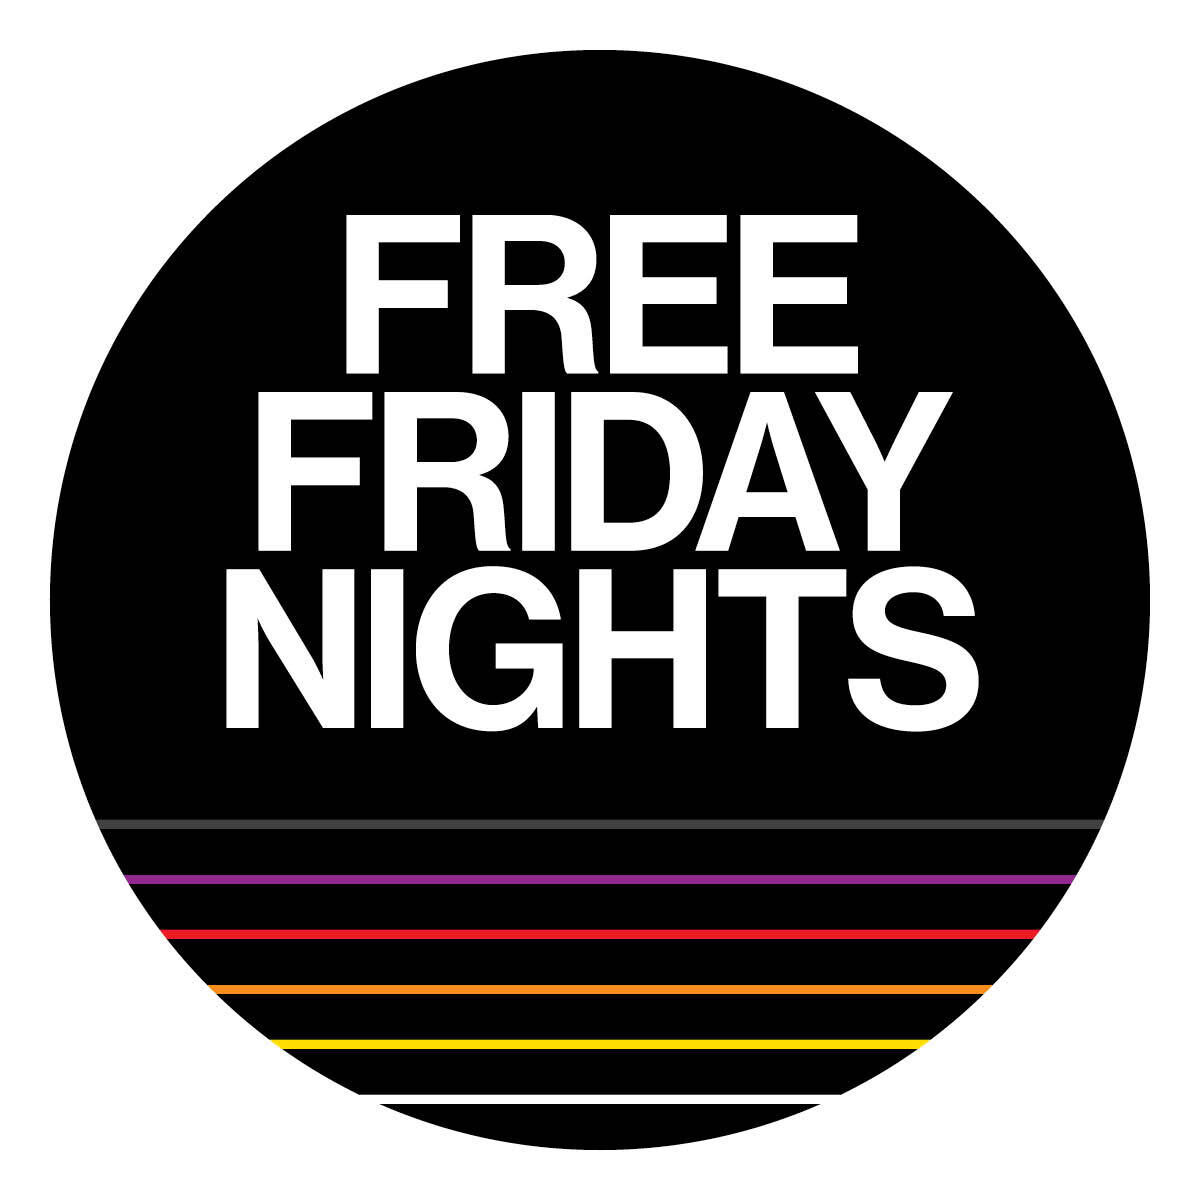 Free Friday Nights graphic